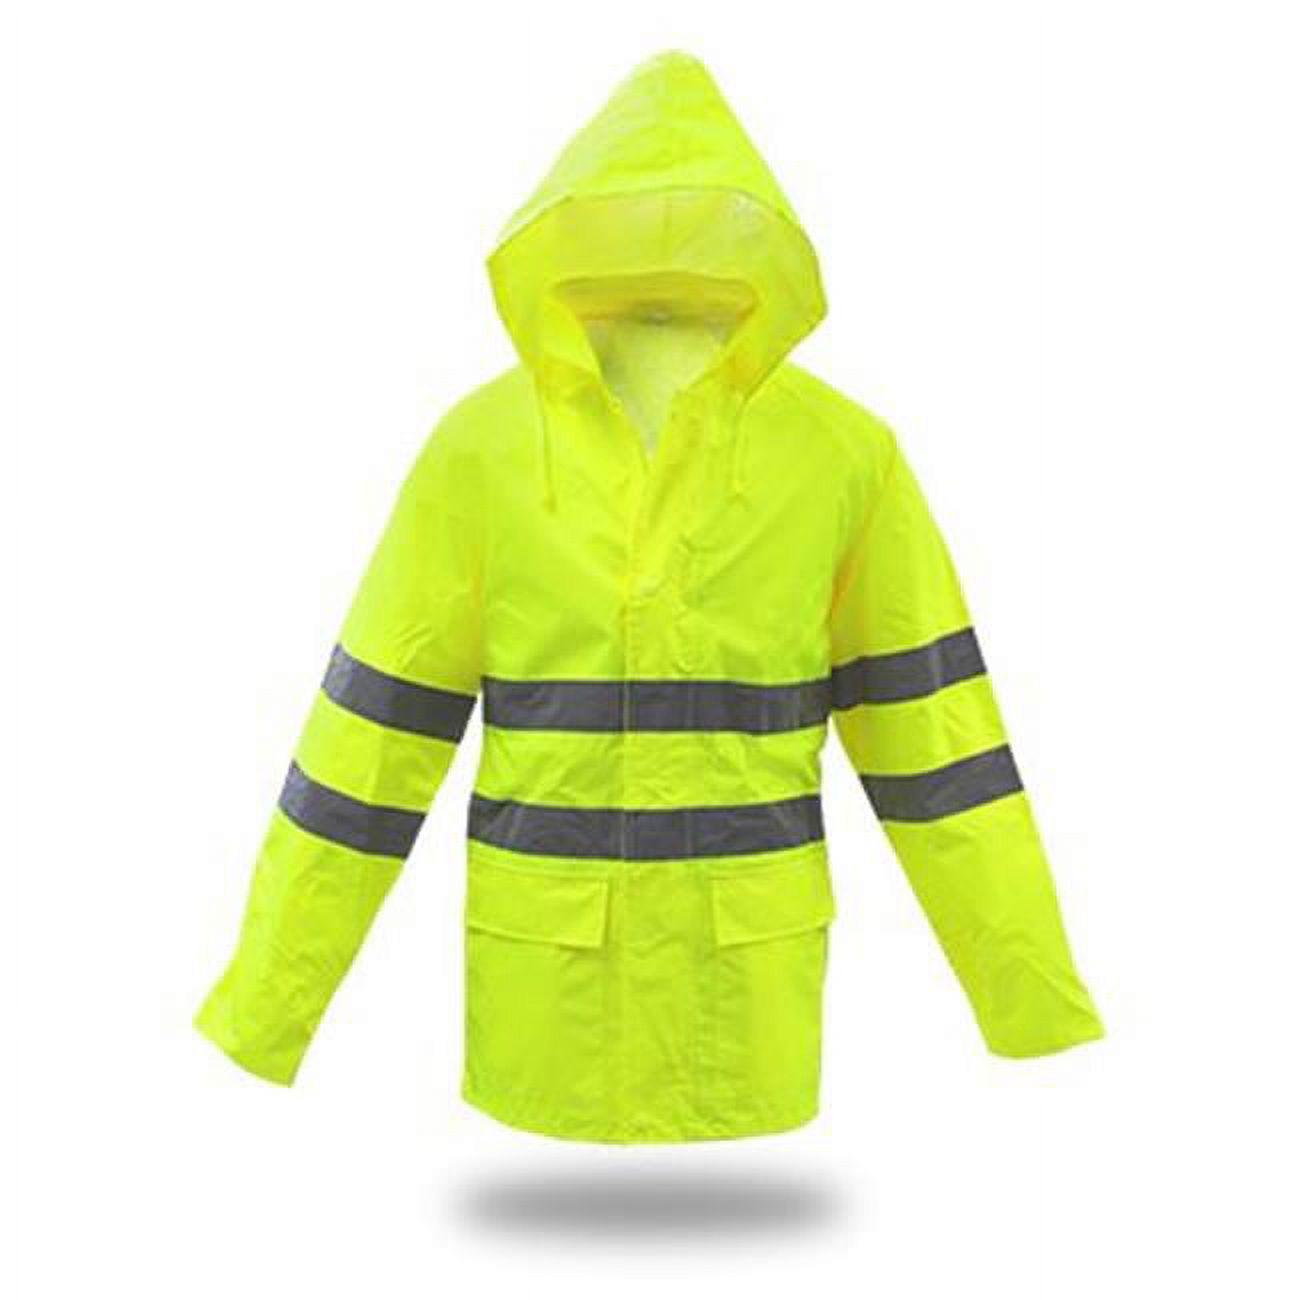 Safety Works 3NR50003X Rain Jacket, Hi Viz Yellow Polyester, XXXL - Quantity 1 - image 1 of 1